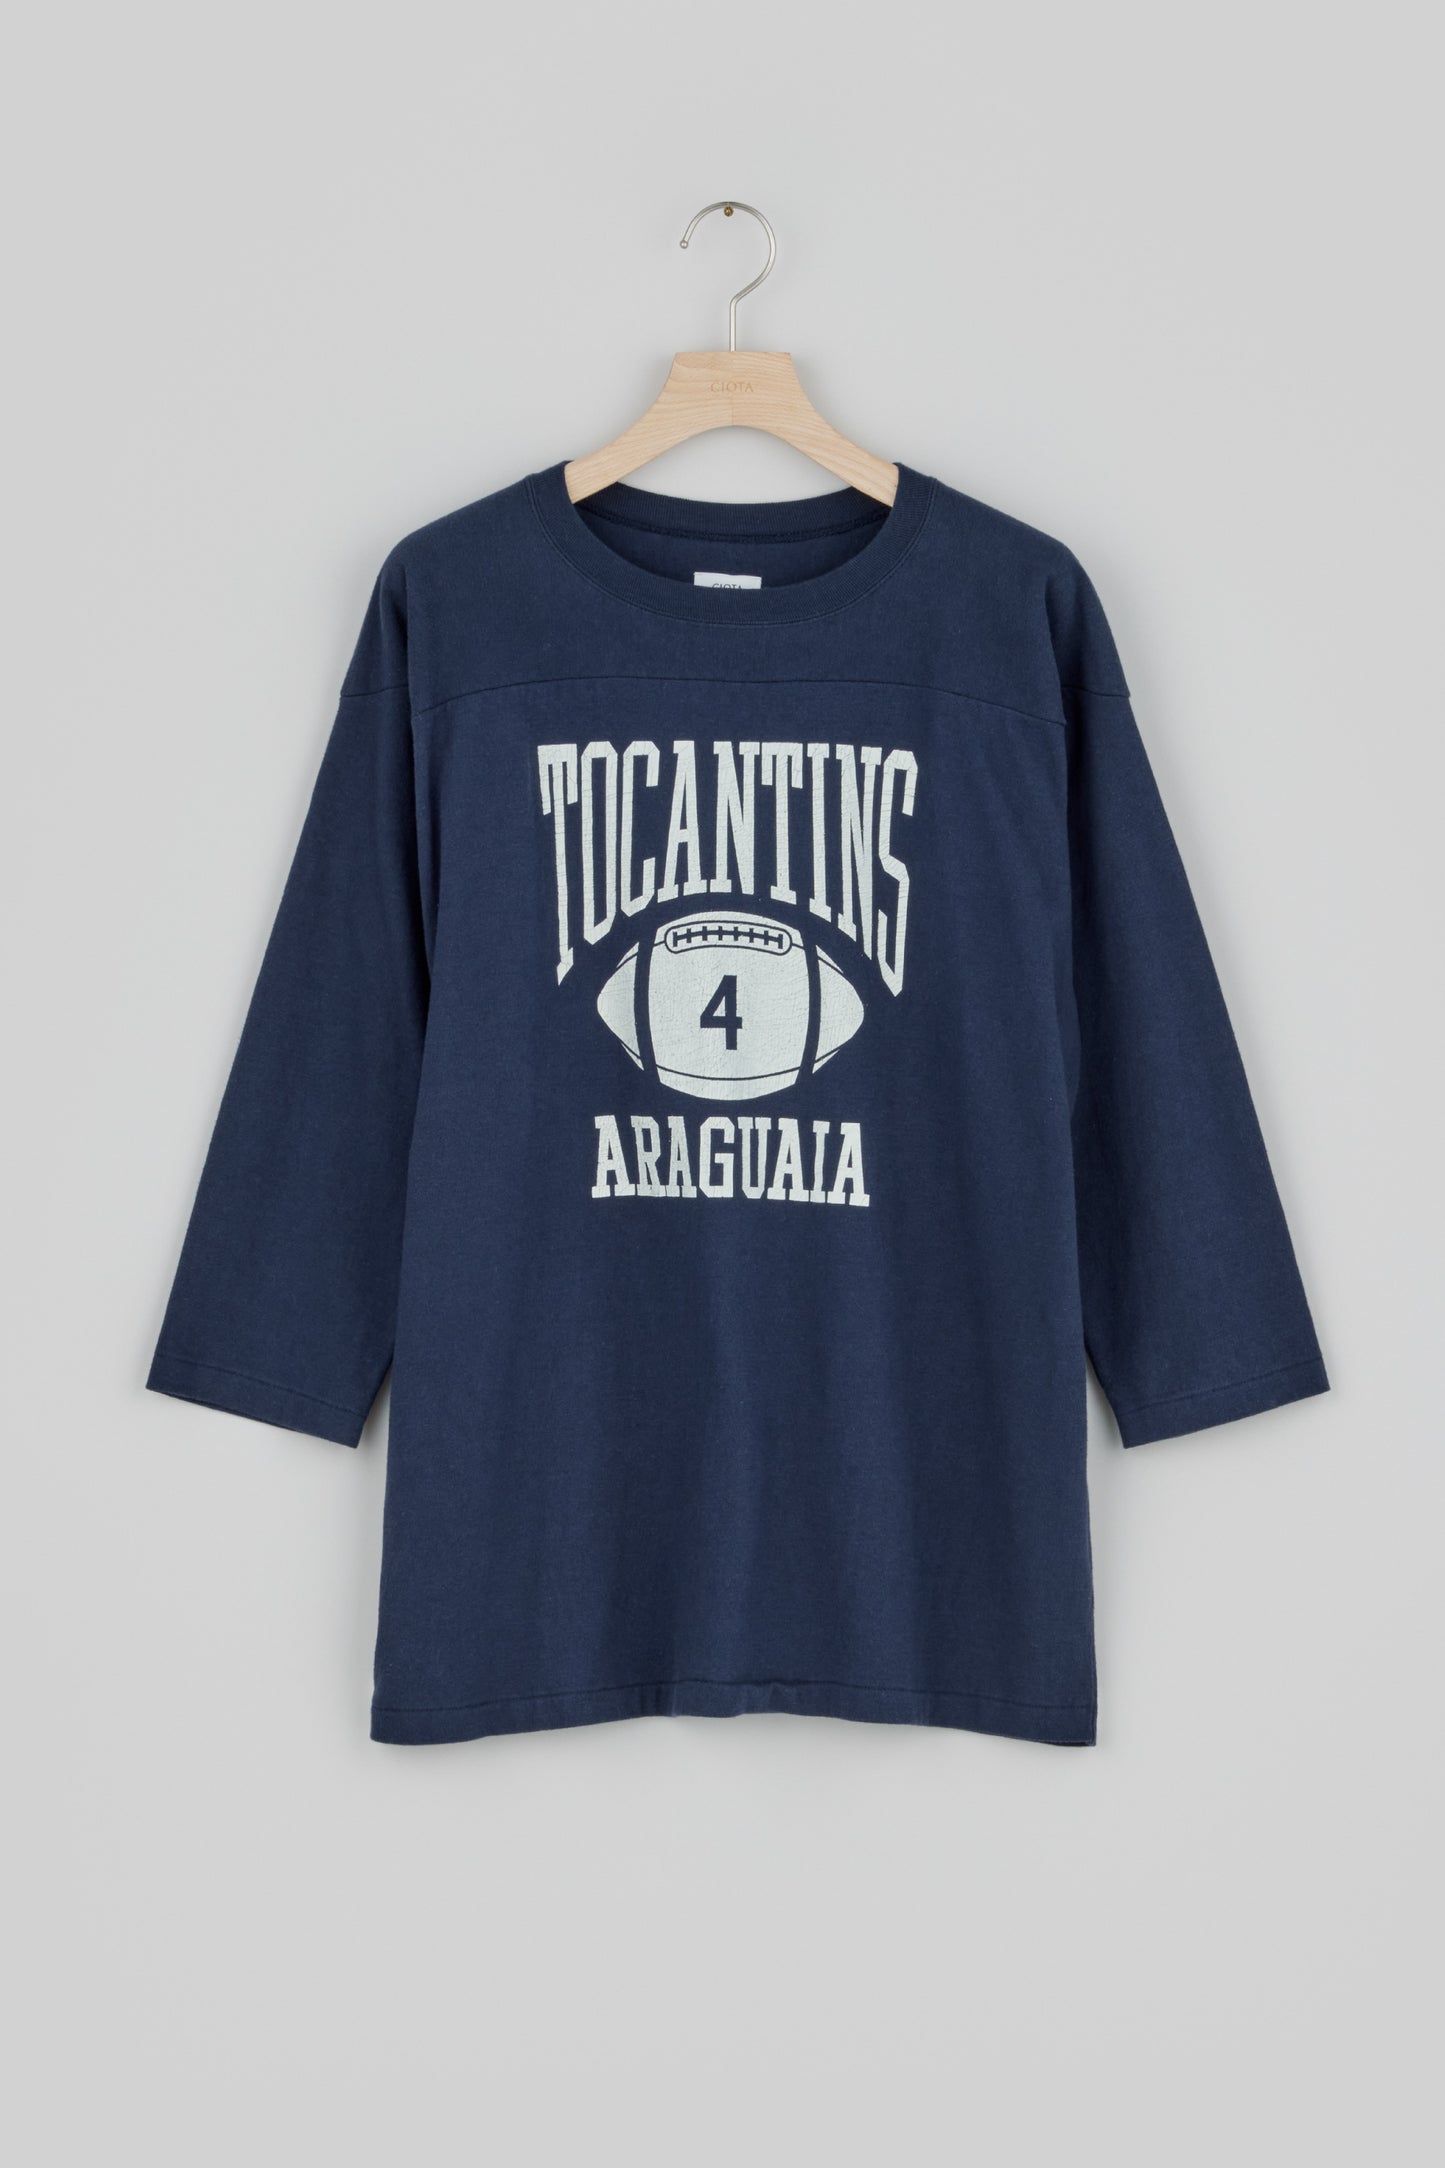 Football 3/4 sleeve T-Shirts (TOCANTINS)